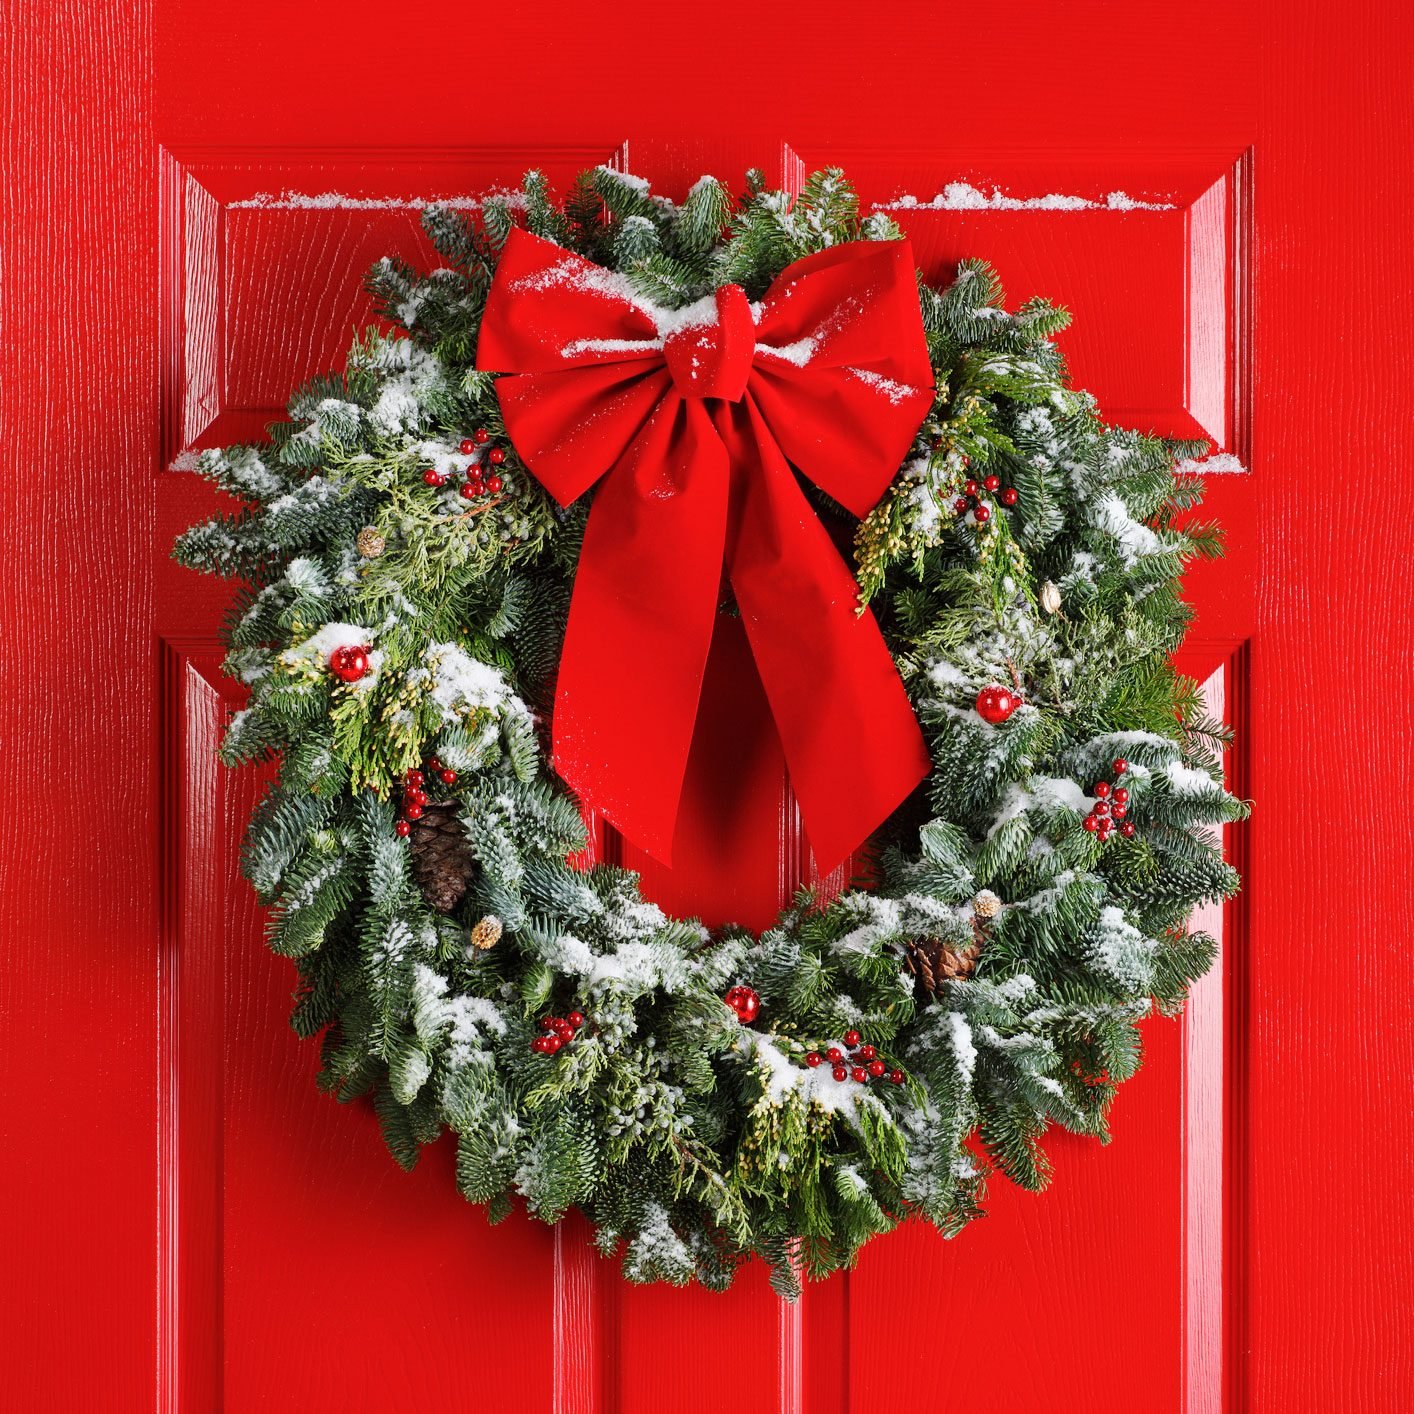 DIY Red and Green Pom-Pom Christmas Wreath - Design Improvised